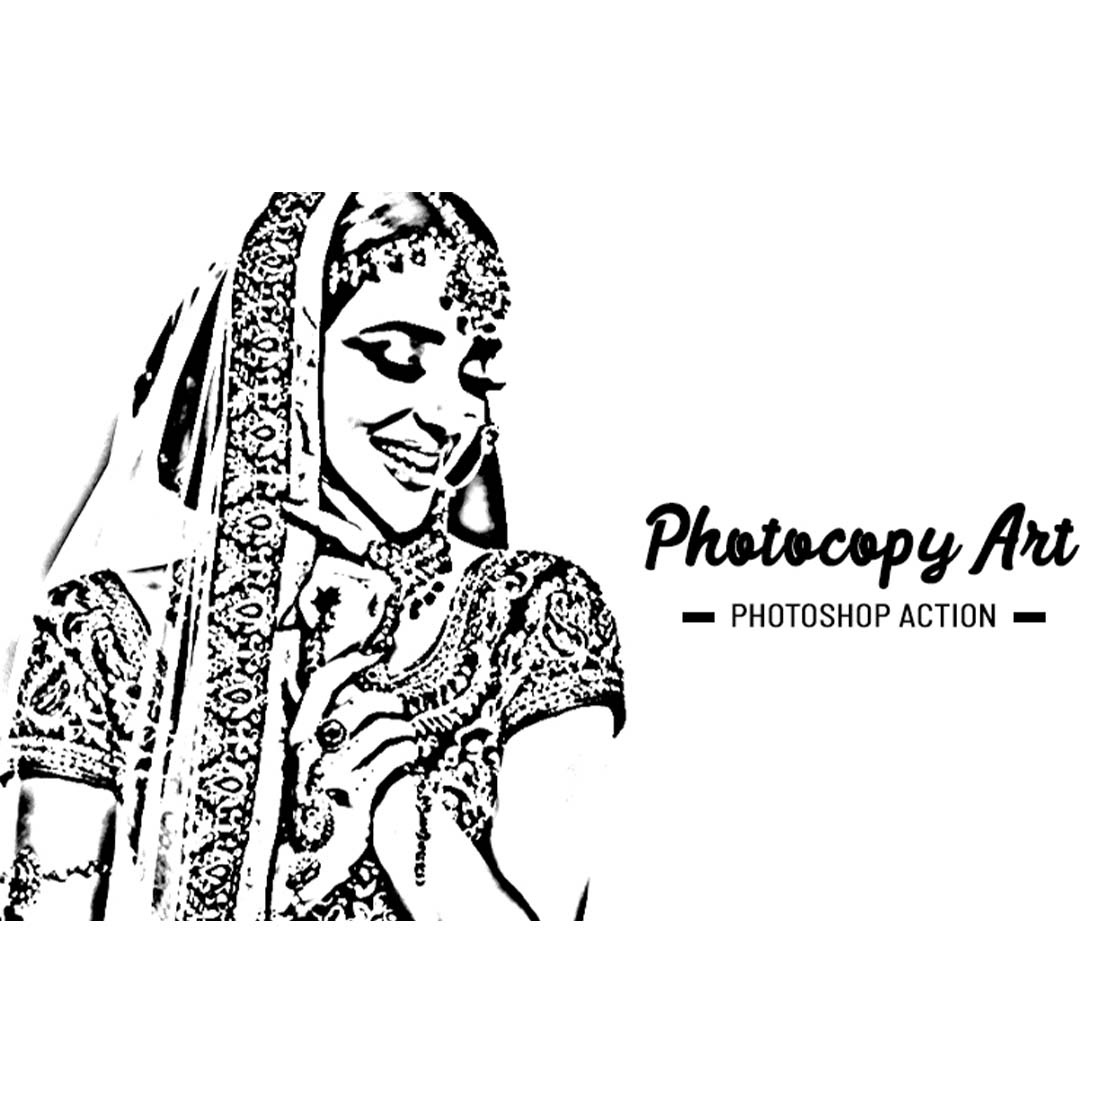 Photocopy Art Photoshop Action cover image.